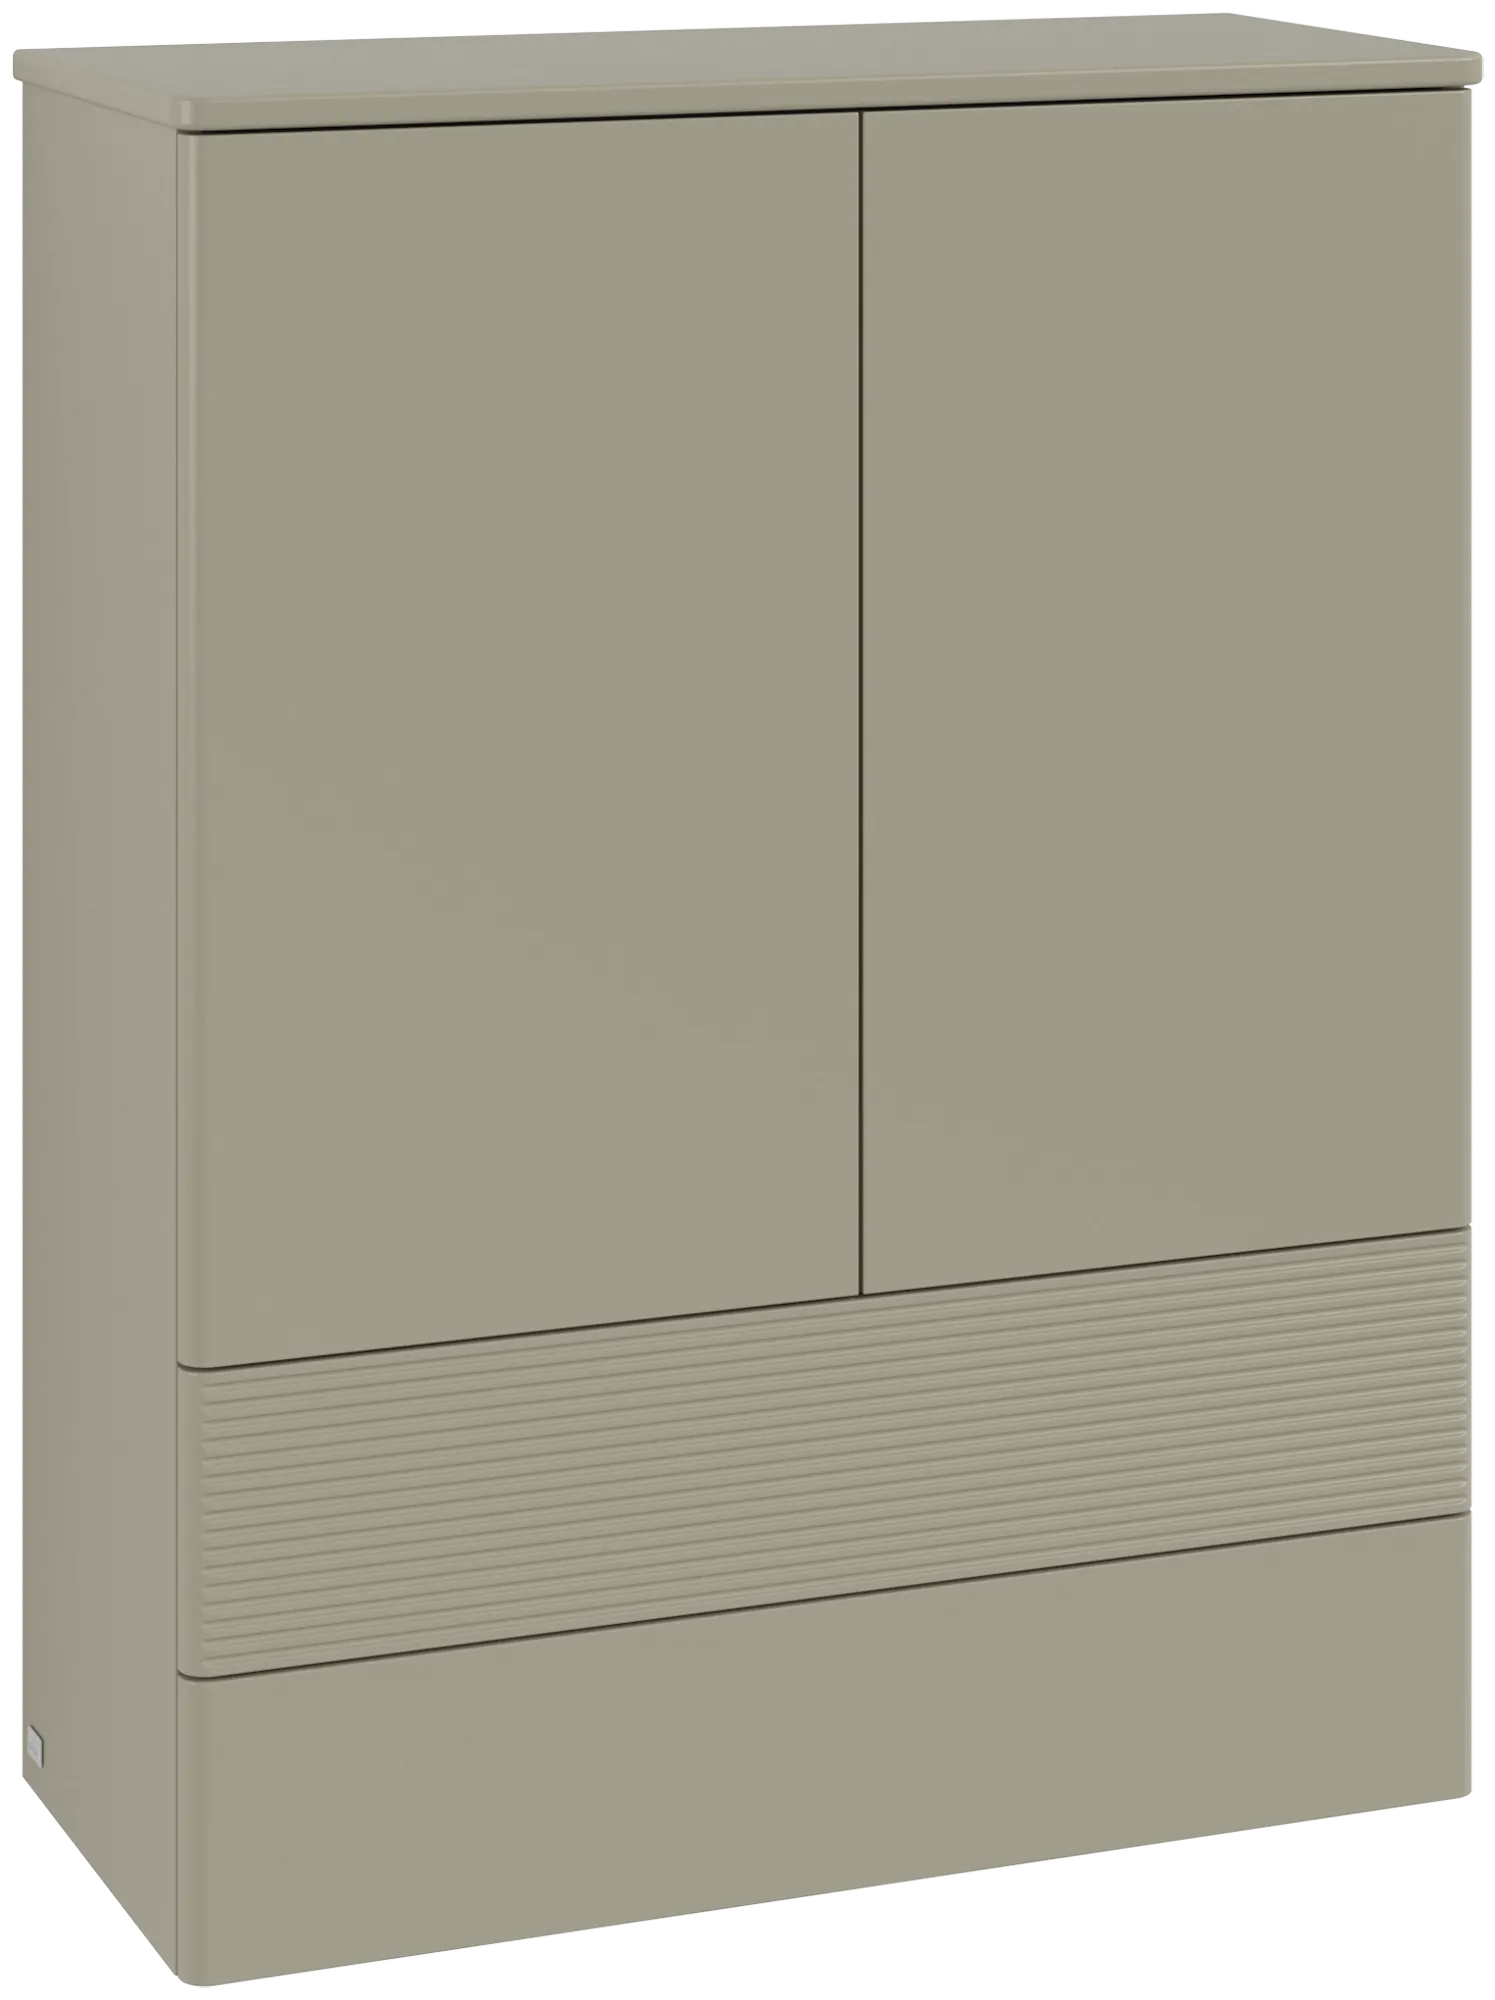 VILLEROY BOCH Antao Highboard, with lighting, 2 doors, 814 x 1039 x 356 mm, Front with grain texture, Stone Grey Matt Lacquer / Stone Grey Matt Lacquer #L47100HK resmi